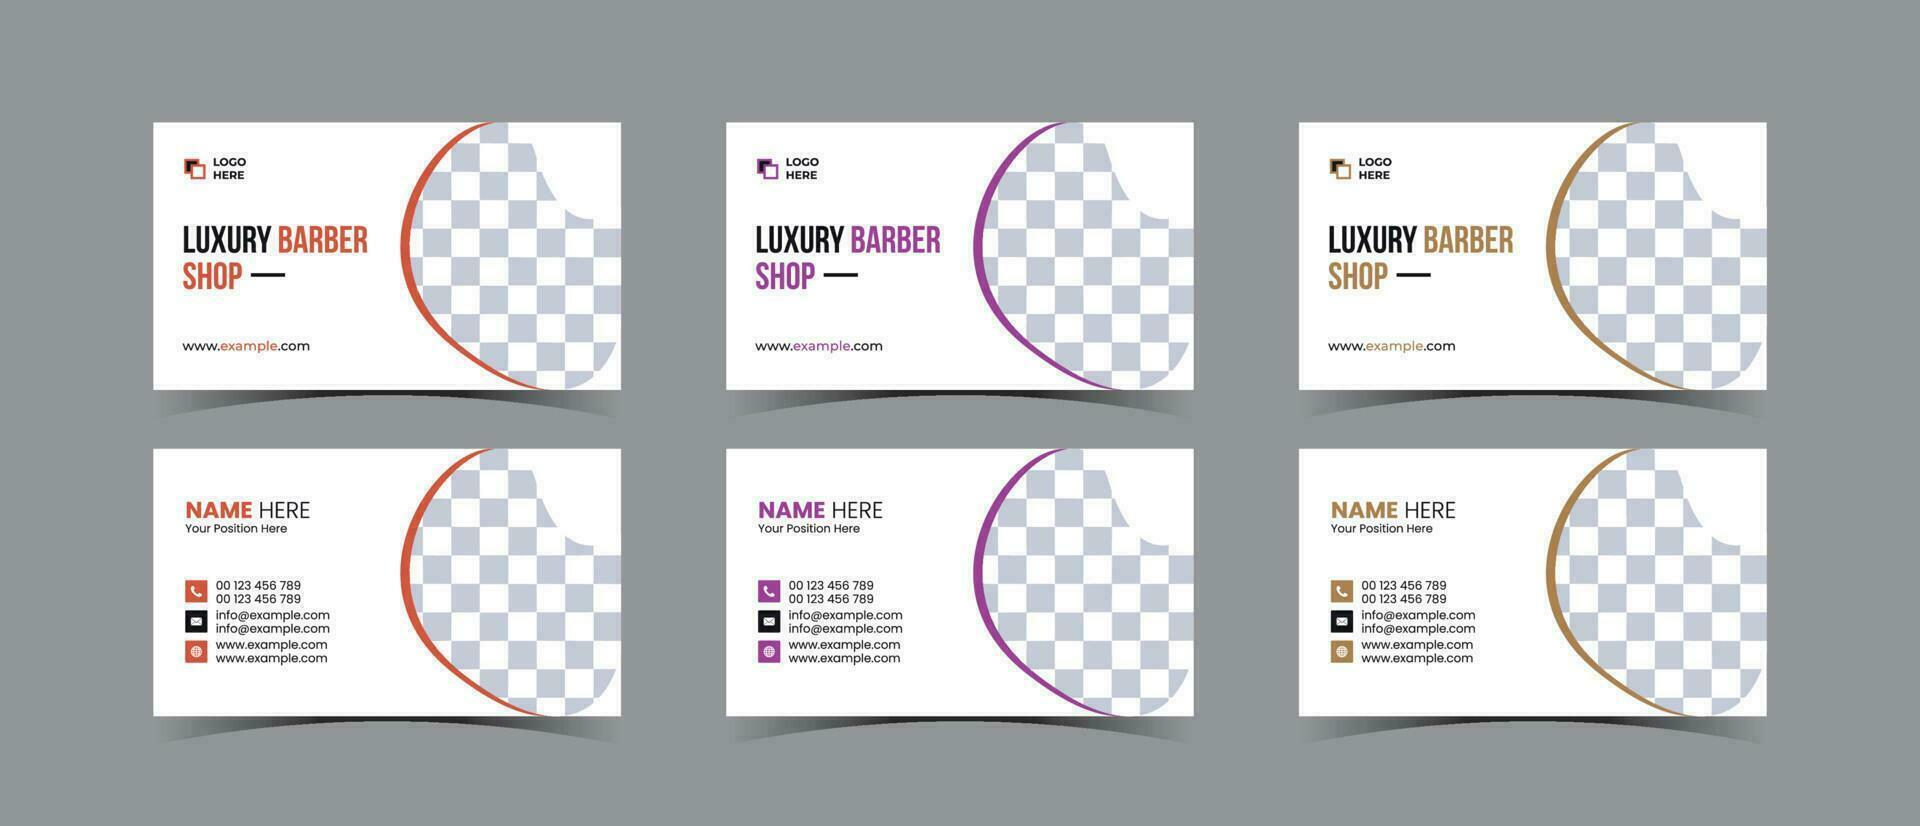 Business card design for Barbershop business vector